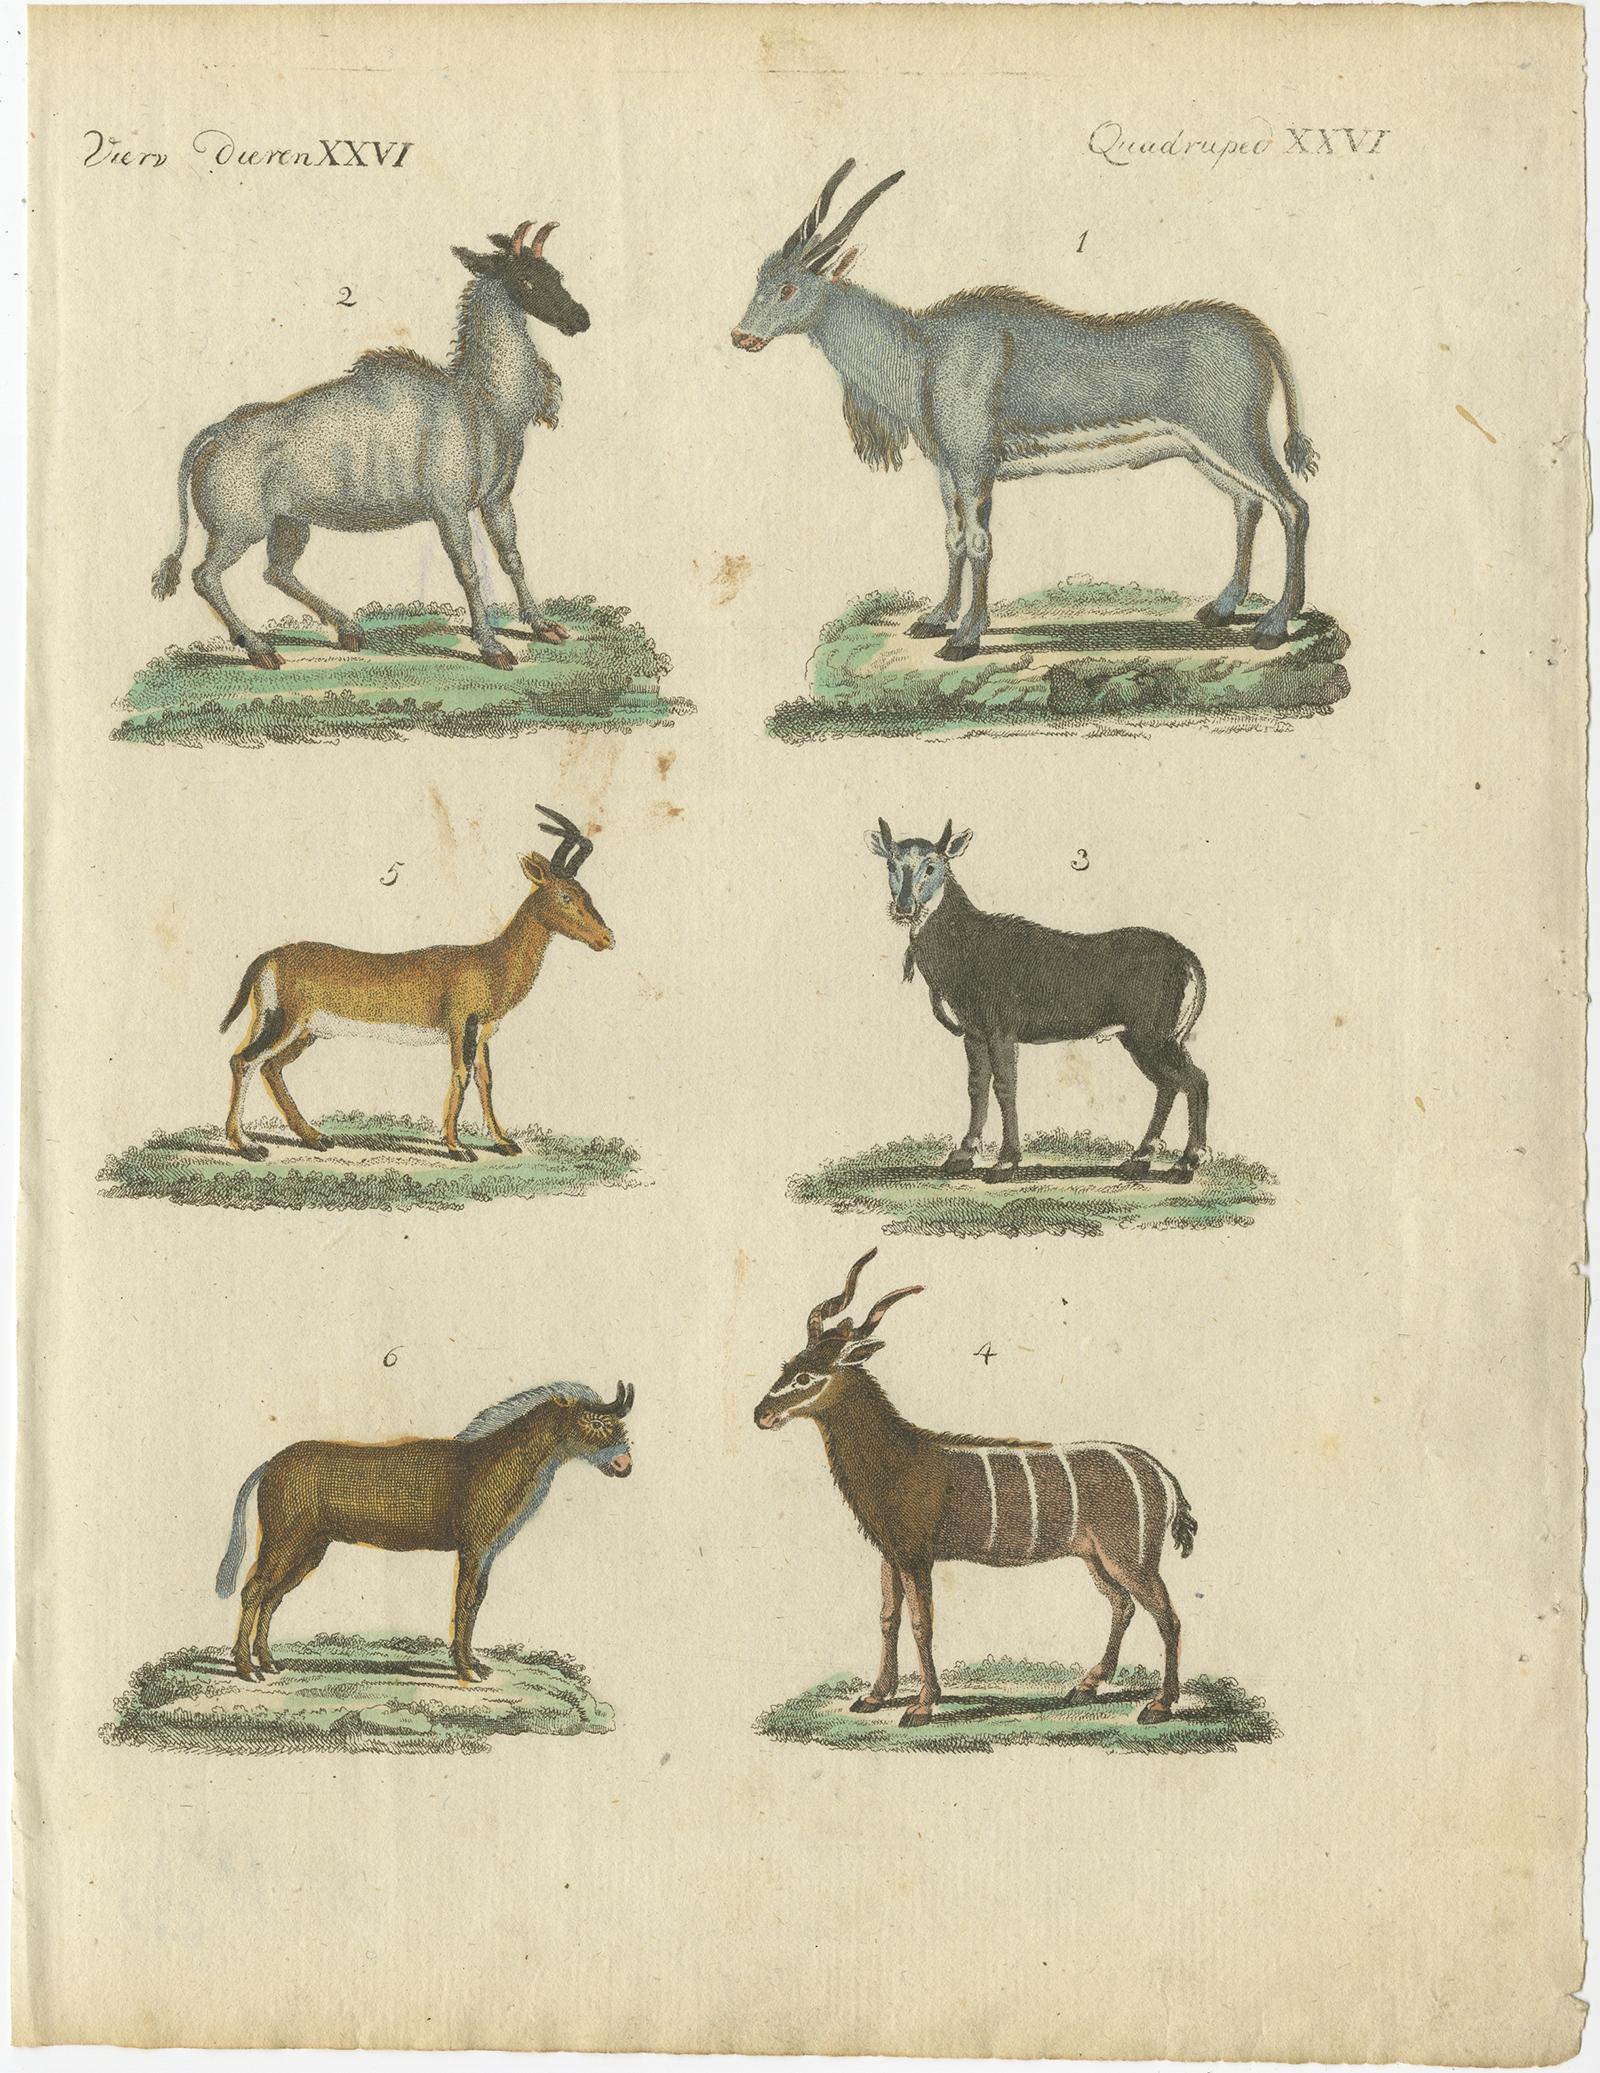 Antique print titled 'Vierv. Dieren XXVI, Quadruped XXVI'. 

This animal print depicts 1. Antilope Oreas, 2.Drago Camelus, 3. Nylgau, 4. Kudu, 5. Antilope Bubalis, 6. Gnou. This engraved print originates from a very rare unknown Dutch work. The